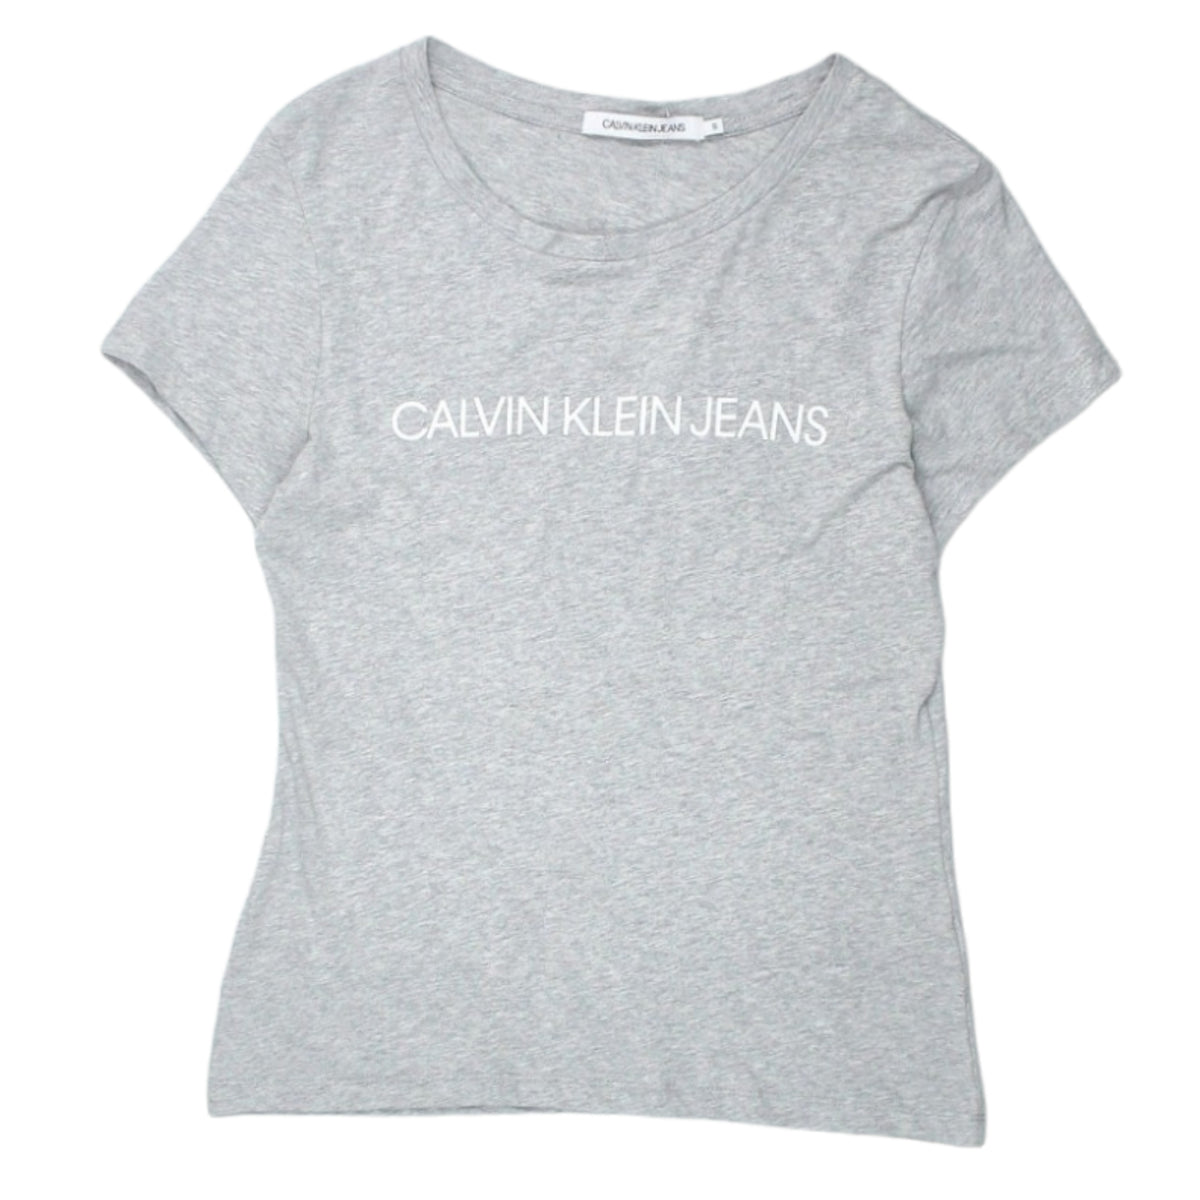 Calvin Klein Jeans Grey Slim Fit T-Shirt